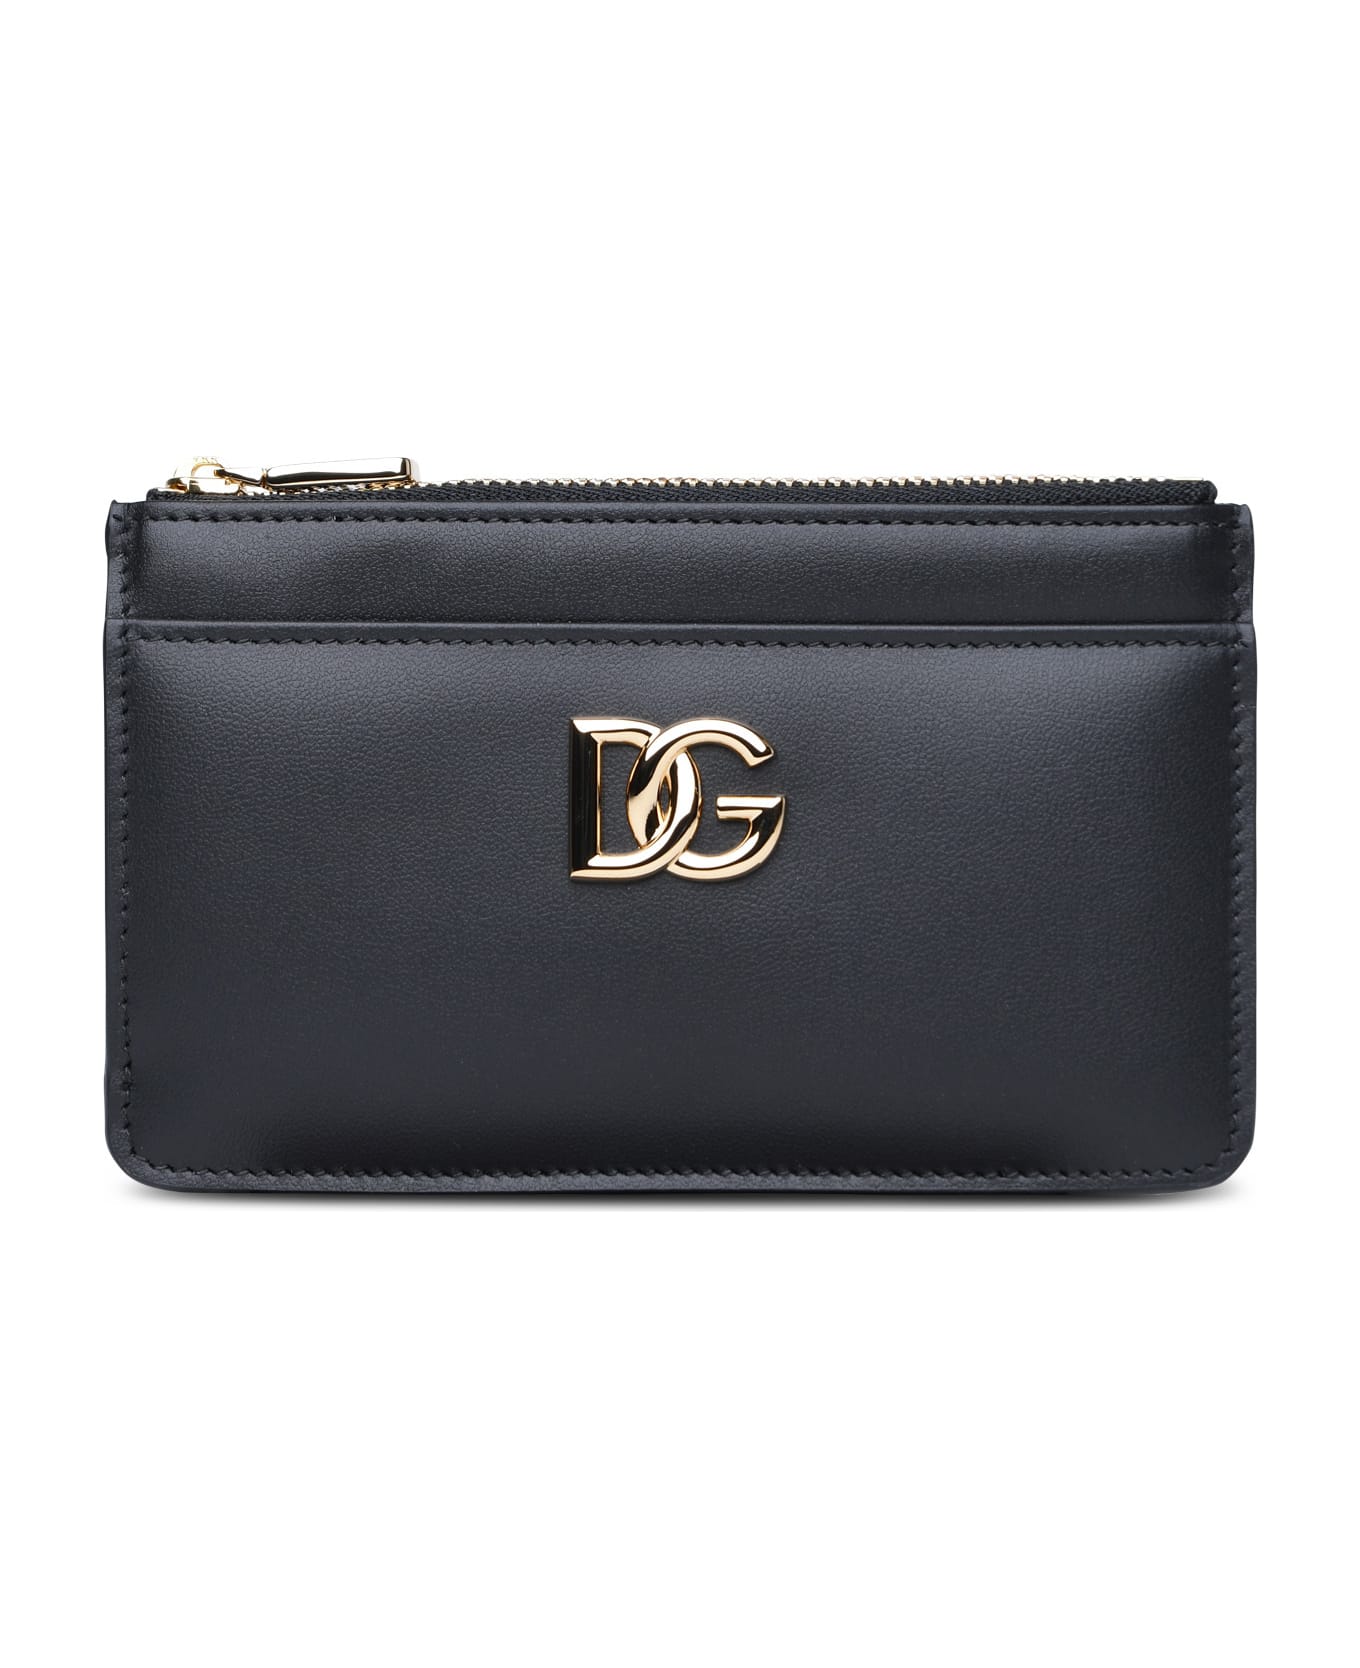 Dolce & Gabbana Black Leather Cardholder - Black